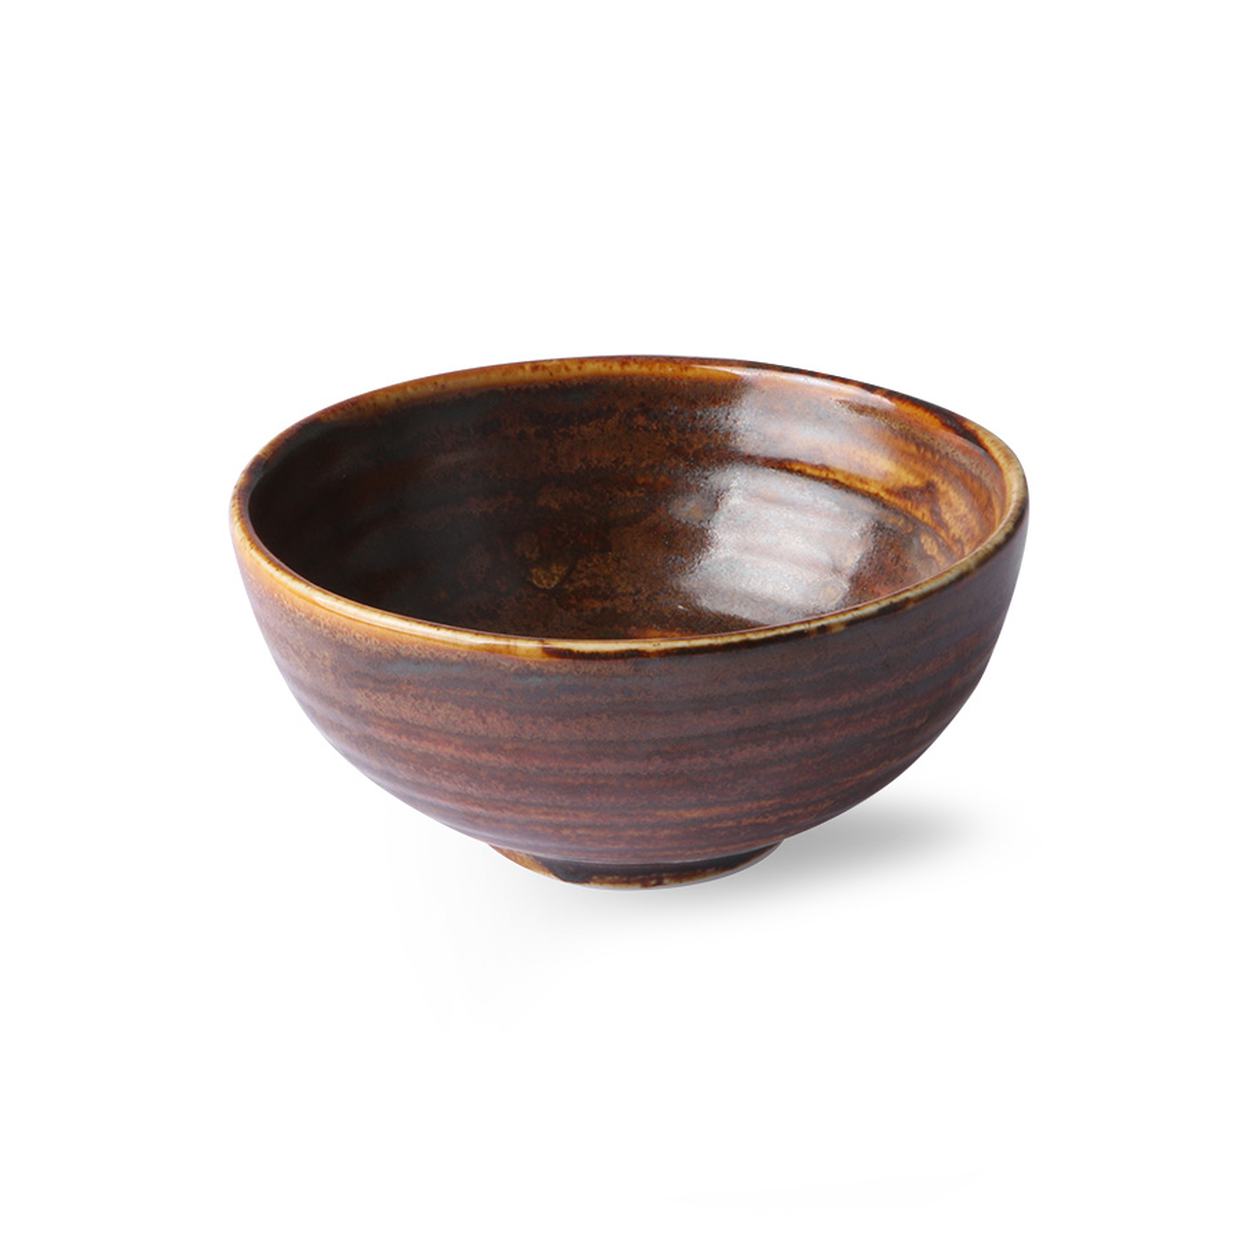 Home chef ceramics: dessert bowl rustic brown